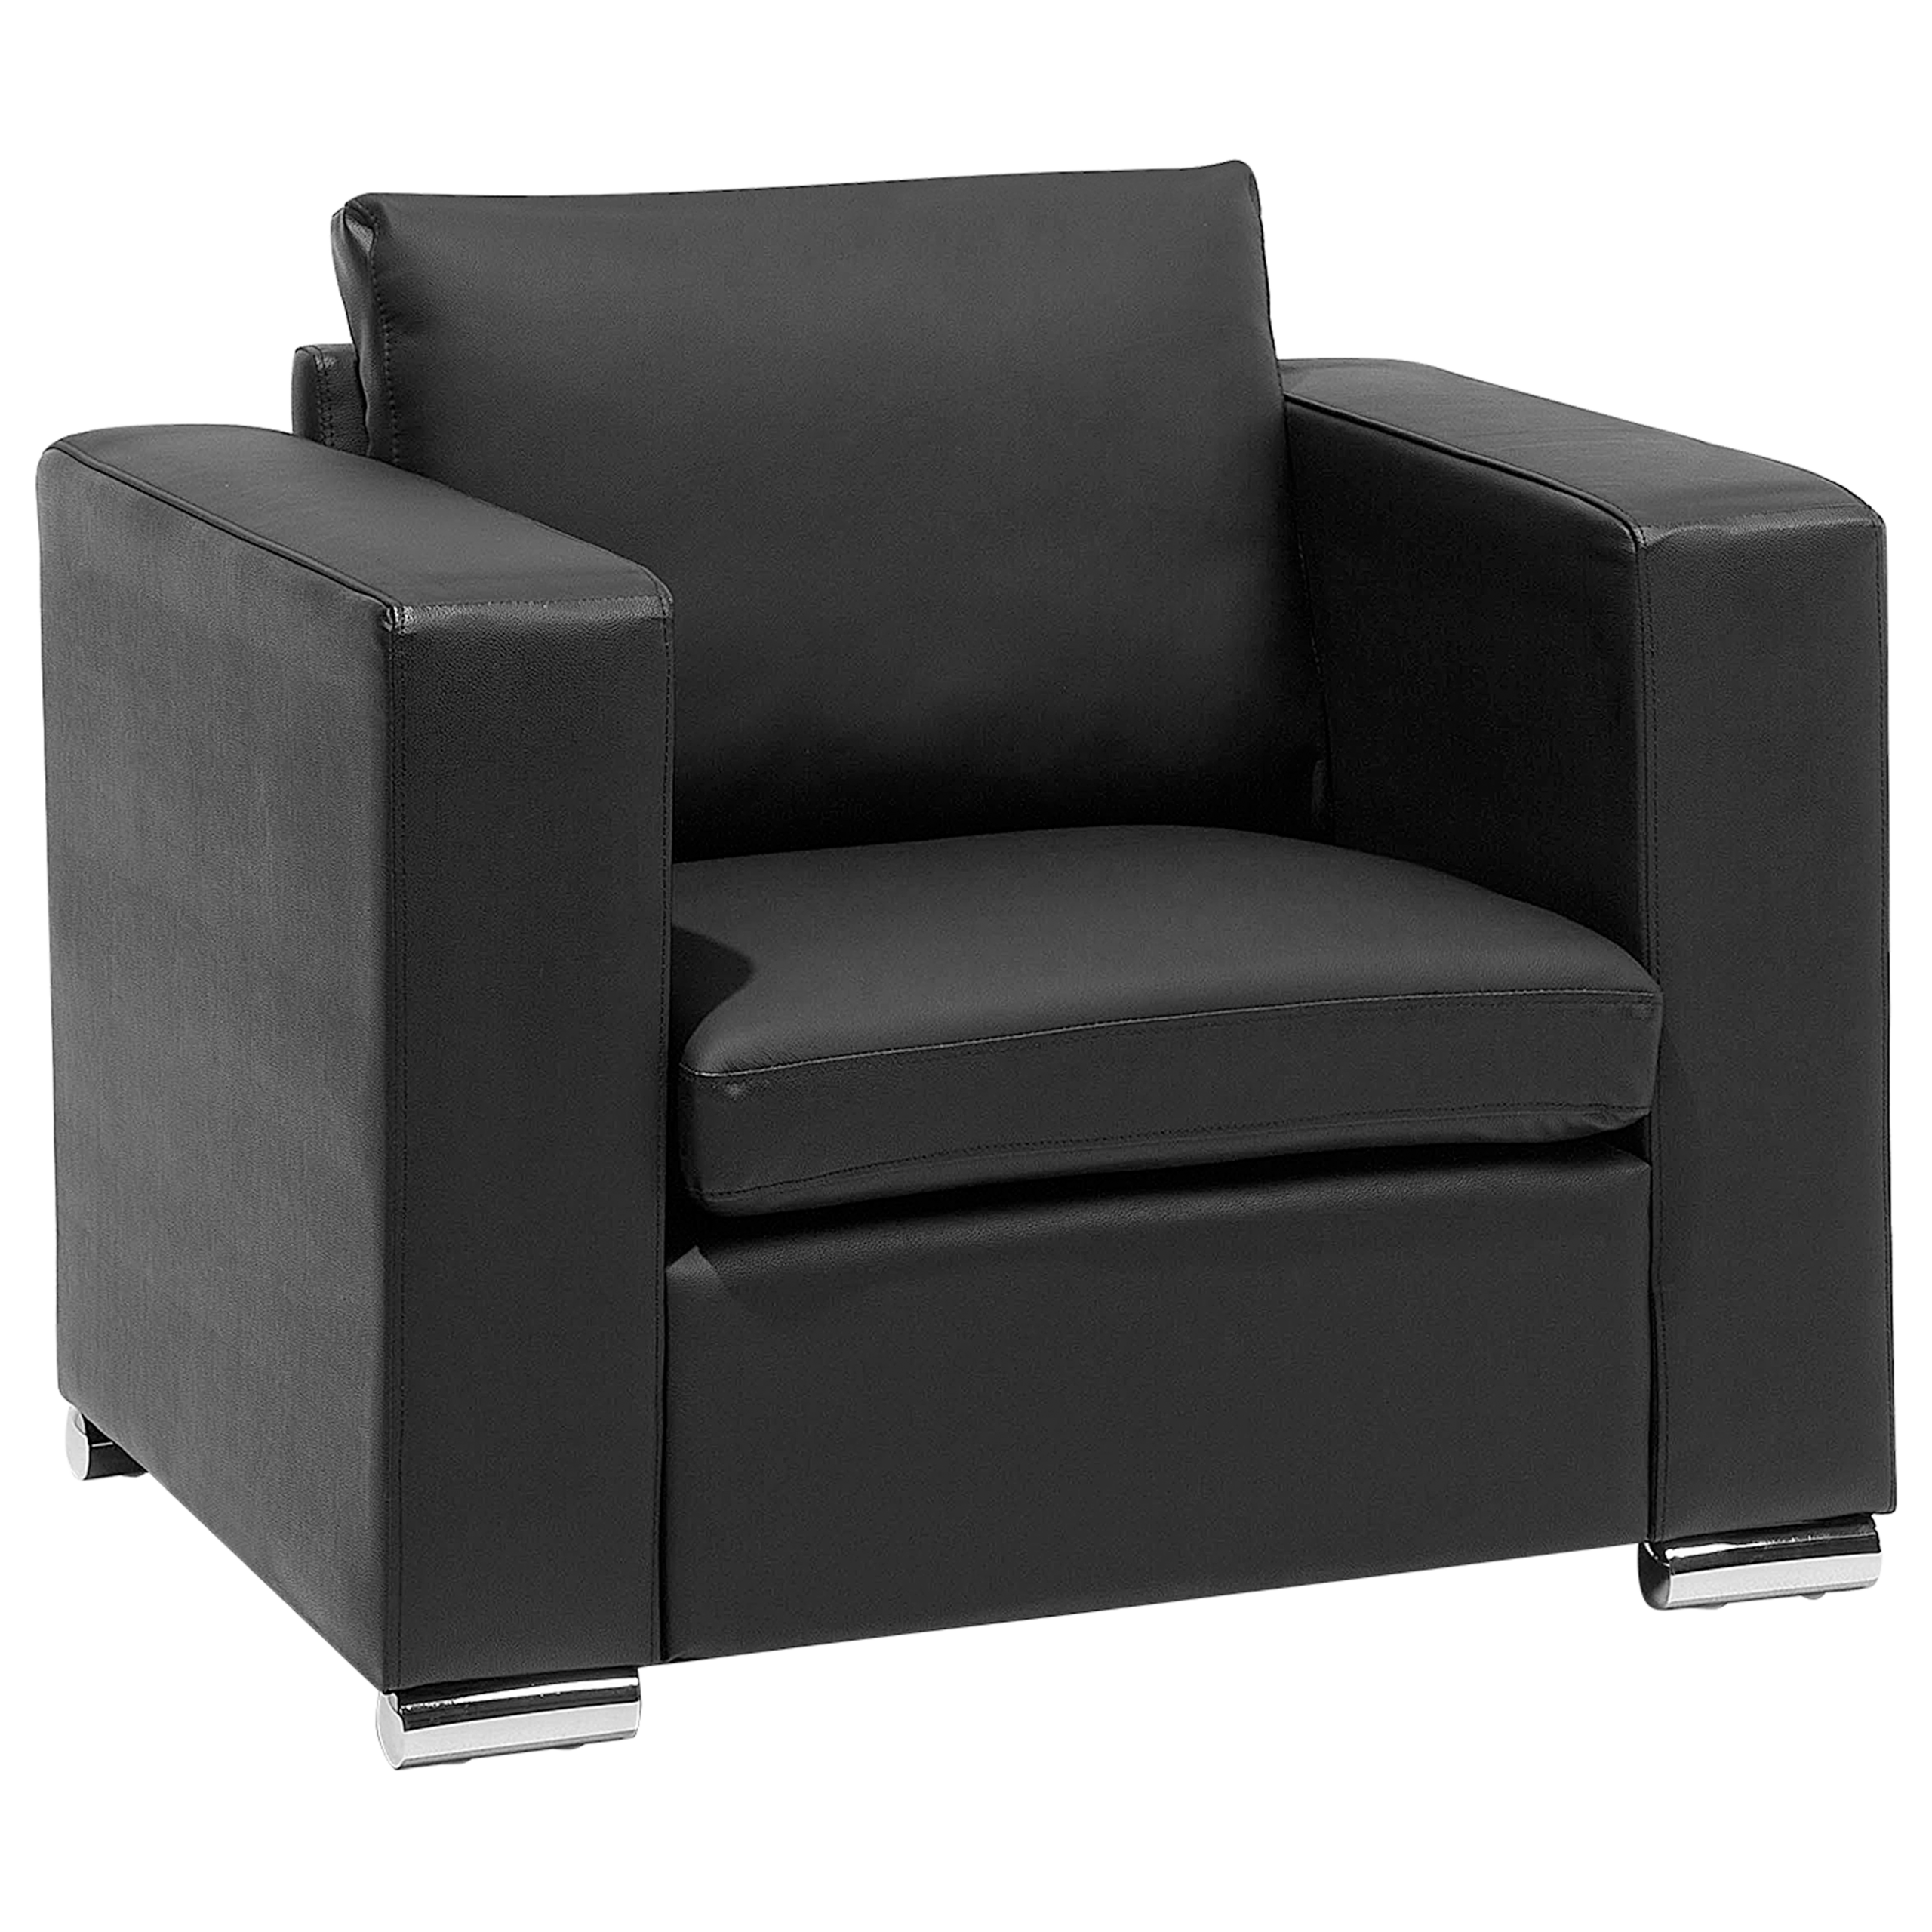 Beliani Armchair Club Chair Black Genuine Leather Upholstery Chromed Legs Retro Design